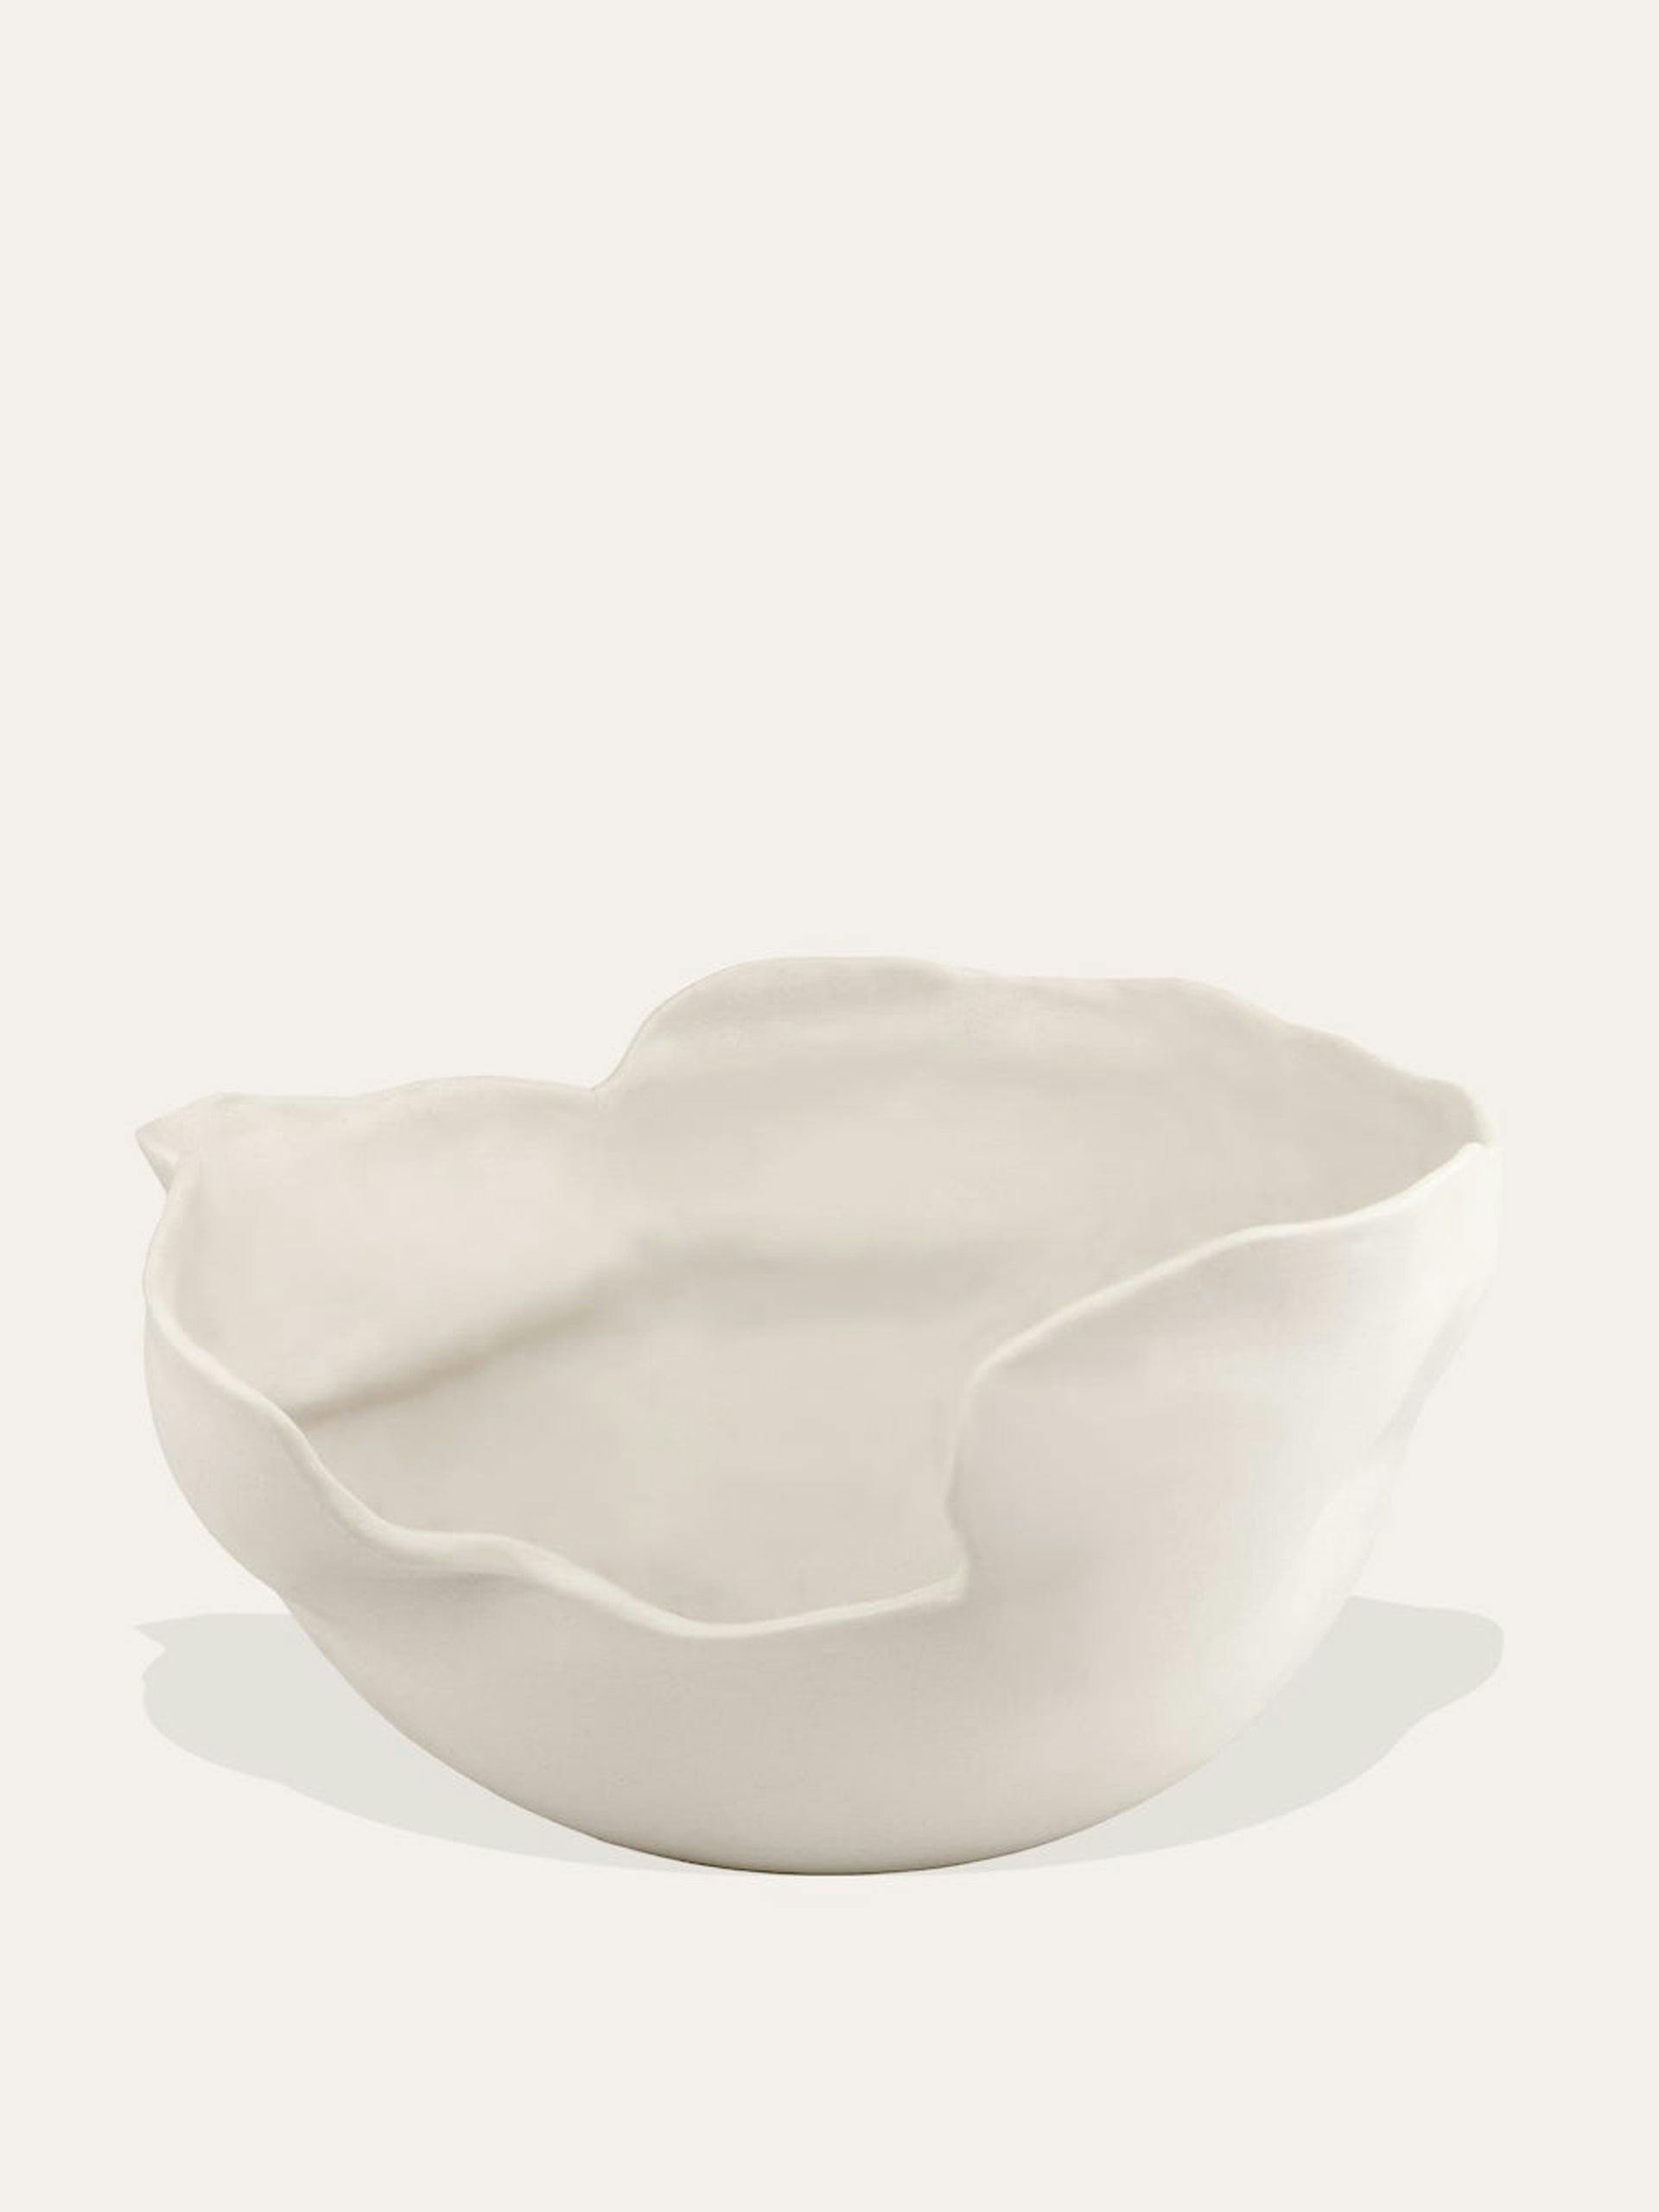 "Fruit Bowl" vessel in matte white